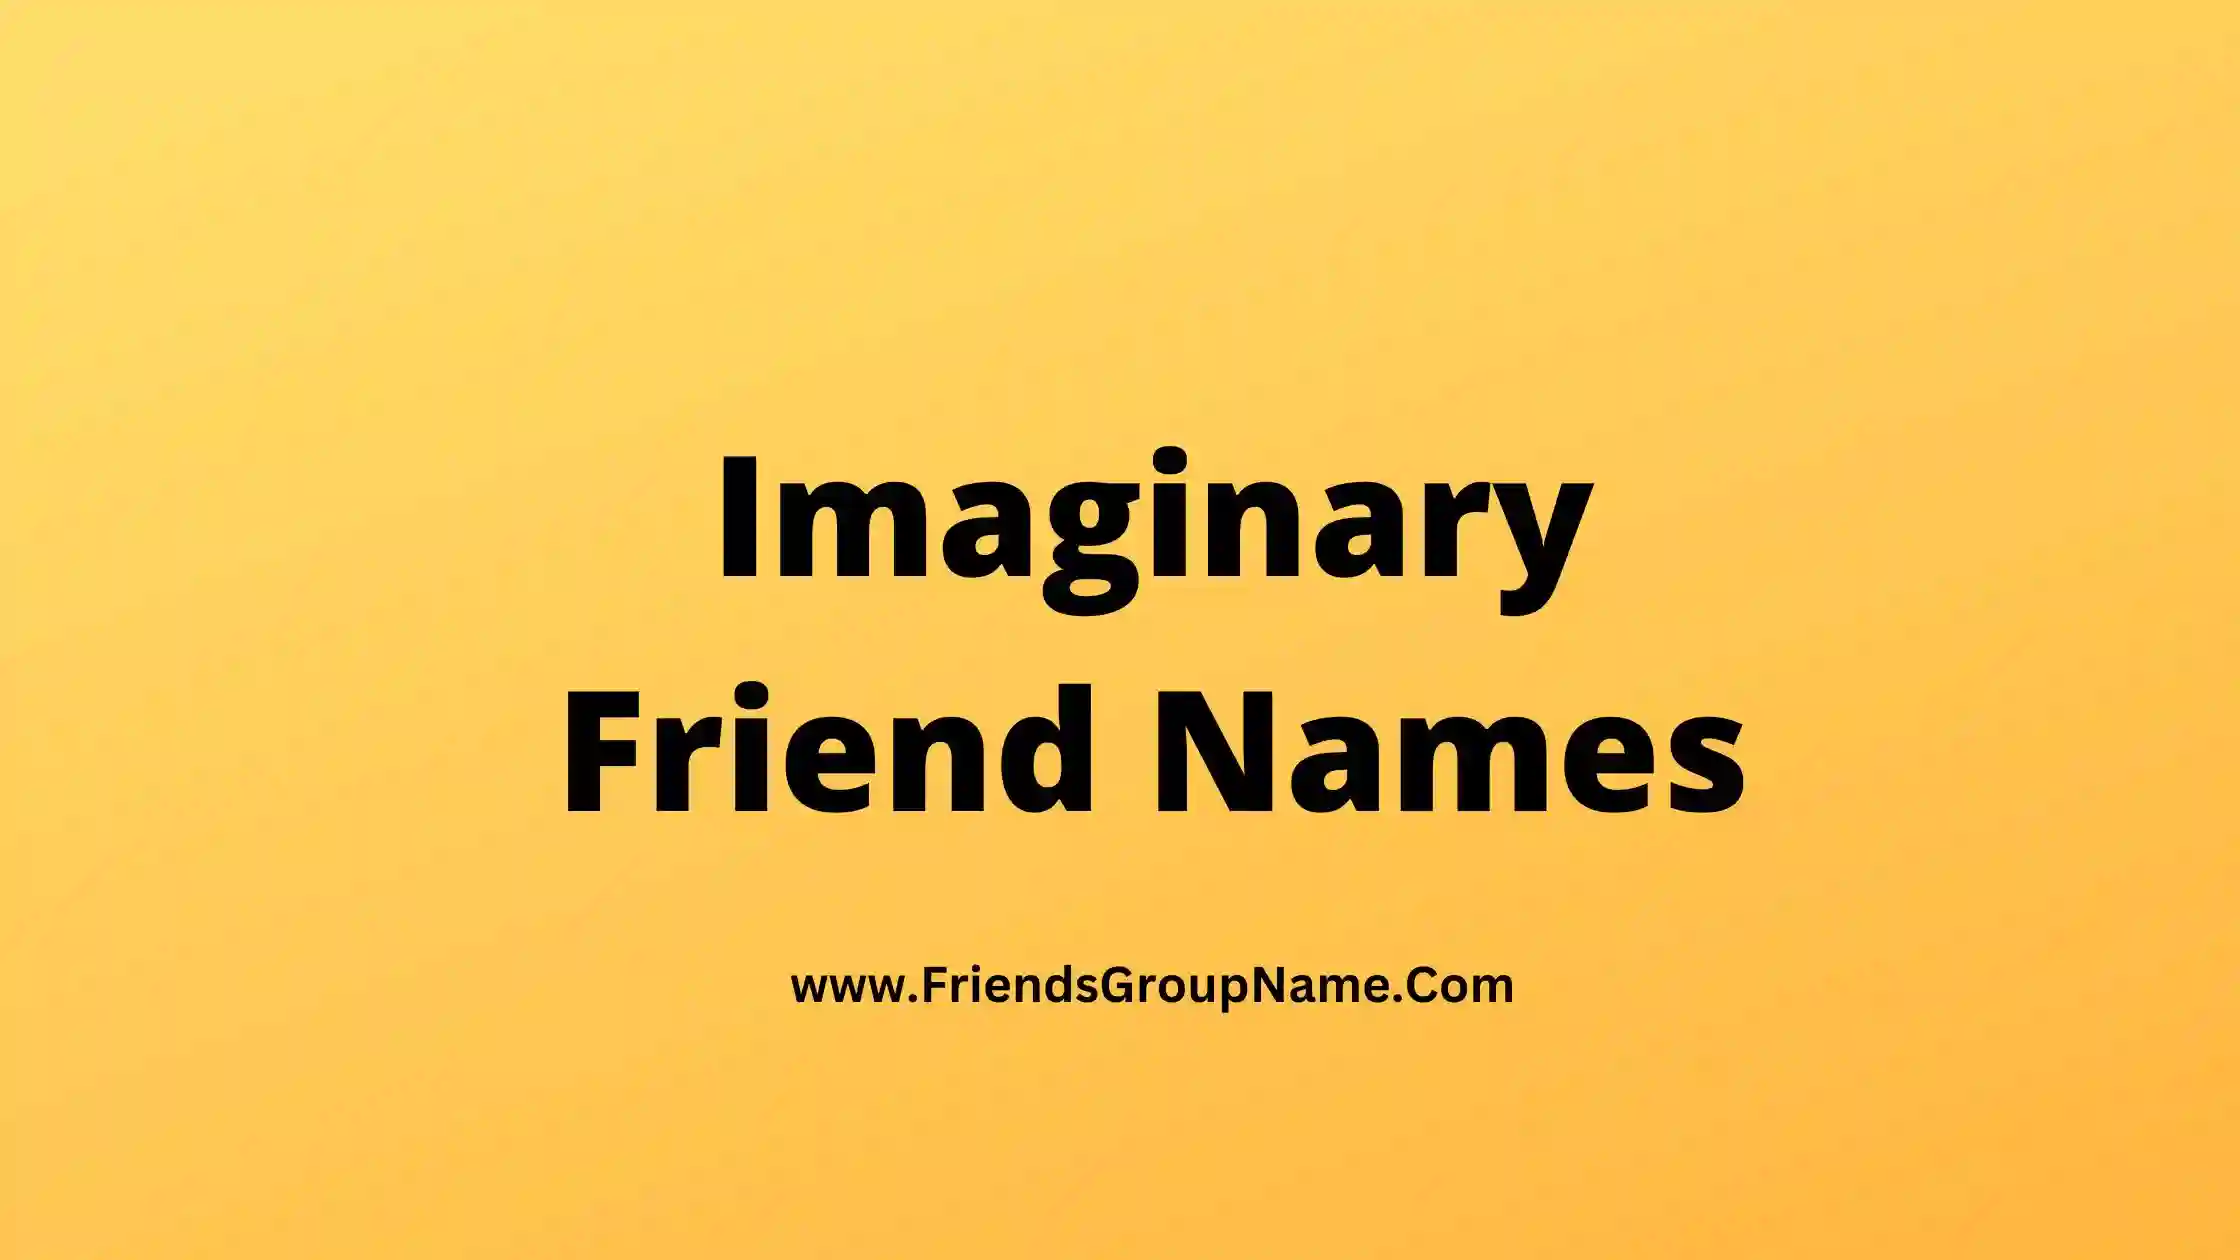 Imaginary Friend Names